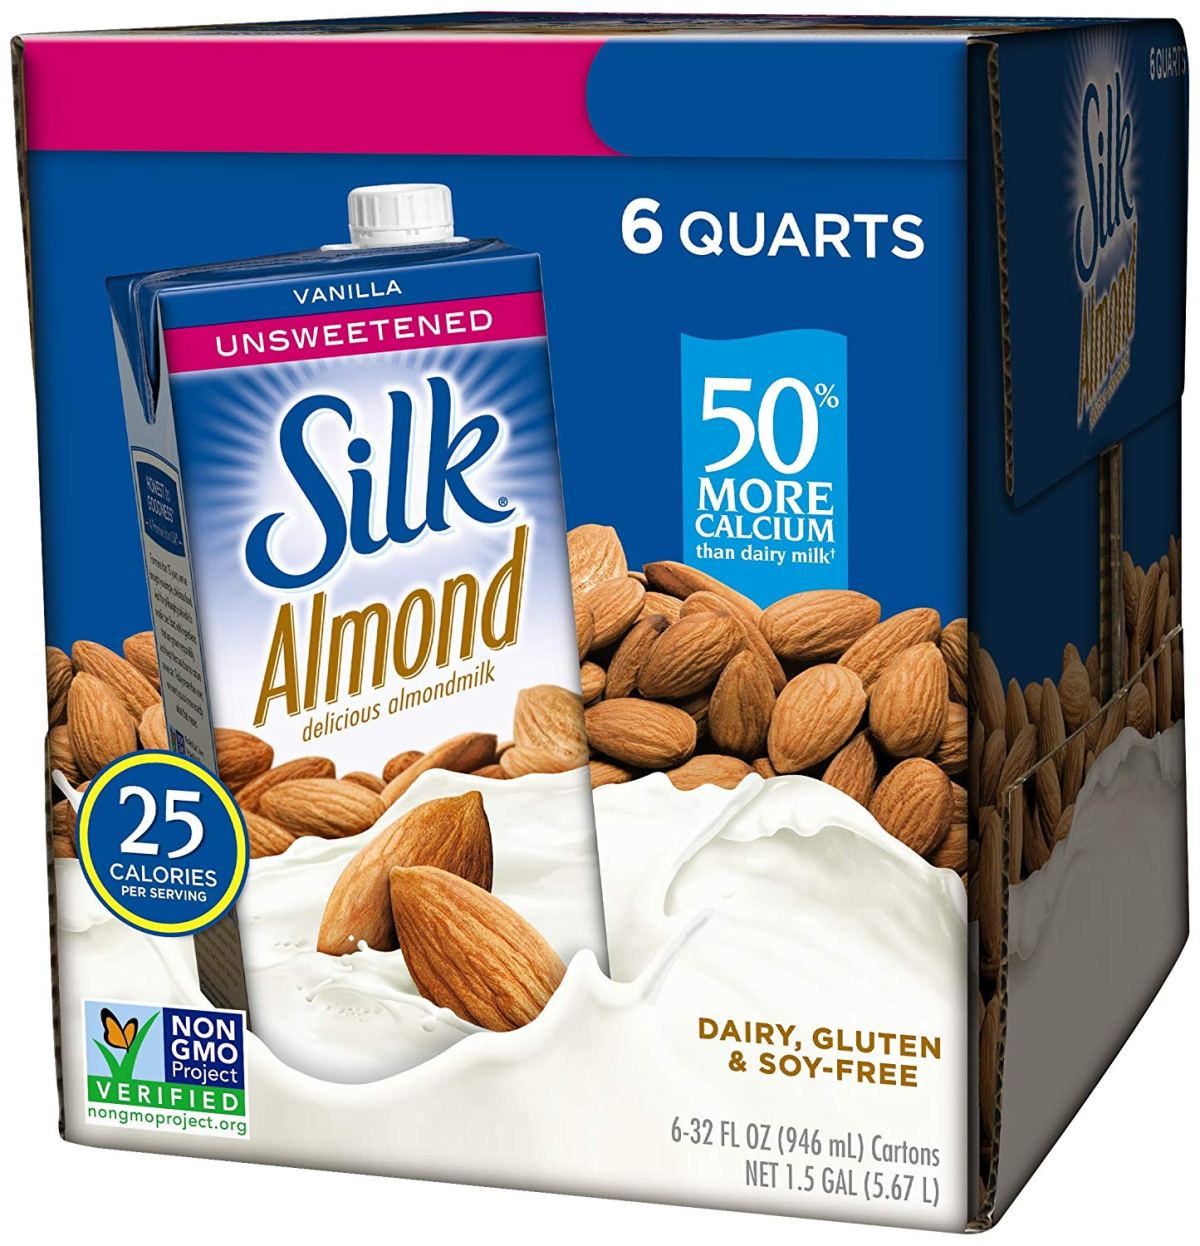 6-pack of Unsweetened Silk Almond Milk in box